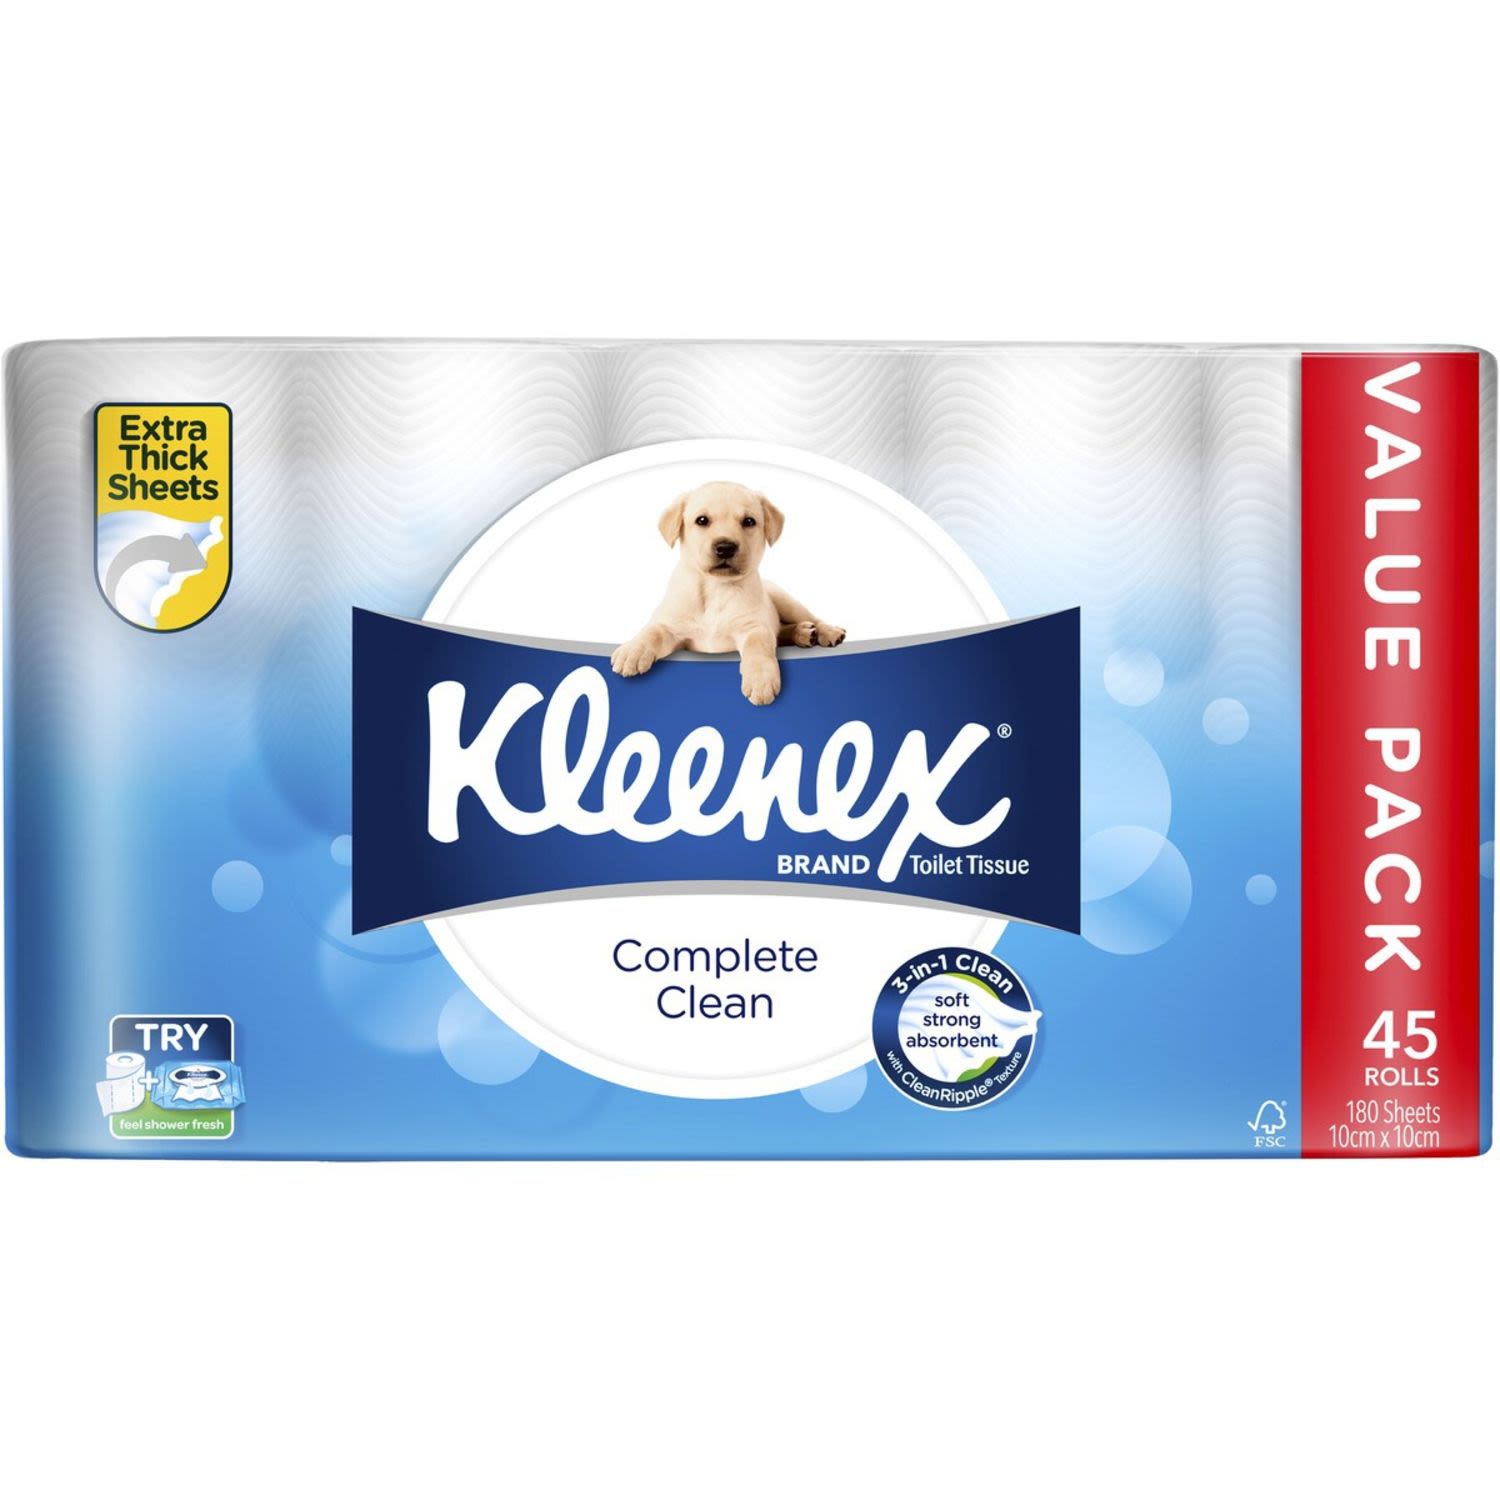 Kleenex Complete Clean Toilet Tissue Value Pack 45 Pack, 45 Each